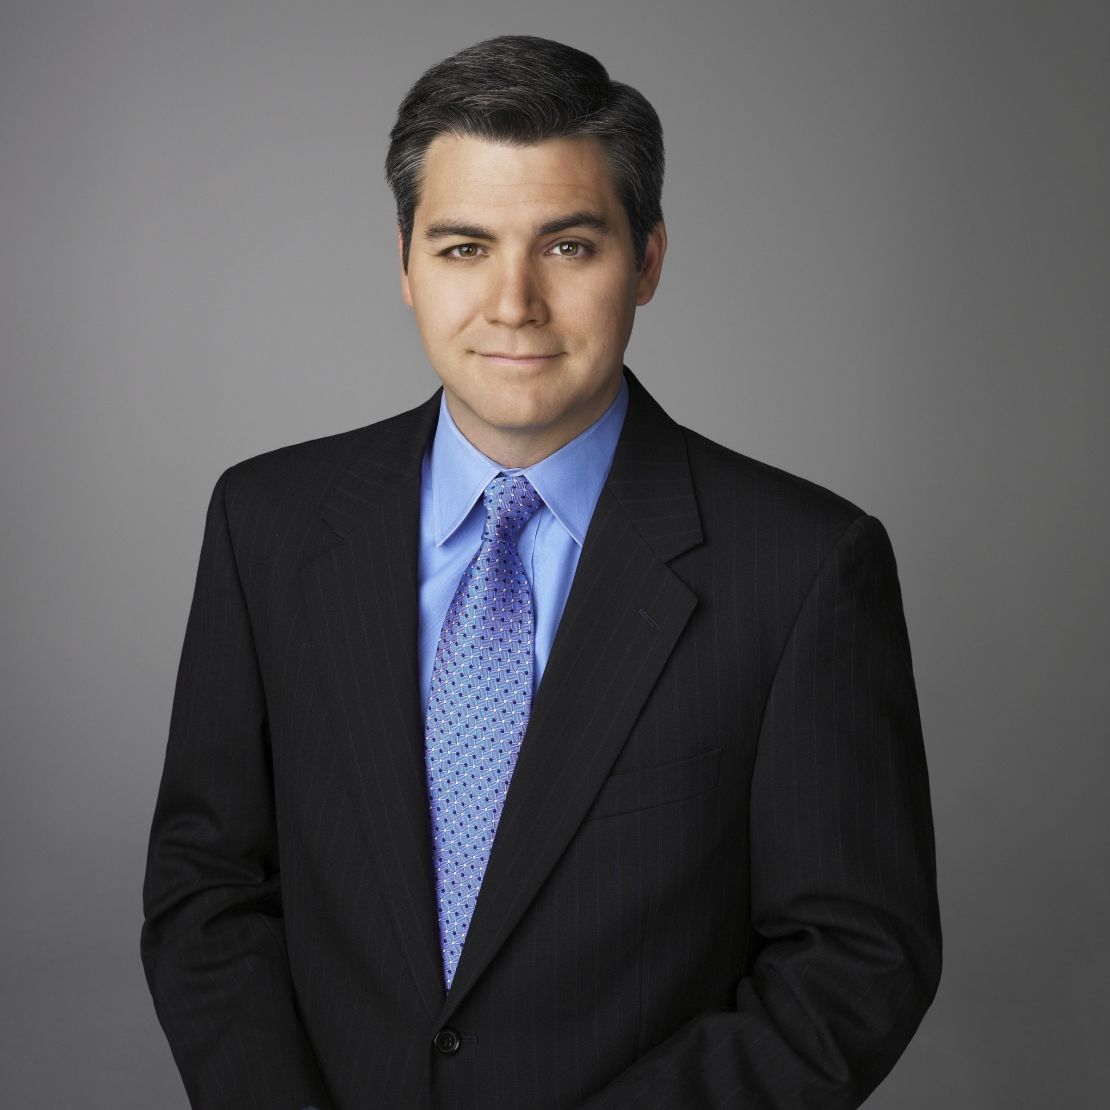 CNN national political correspondent Jim Acosta